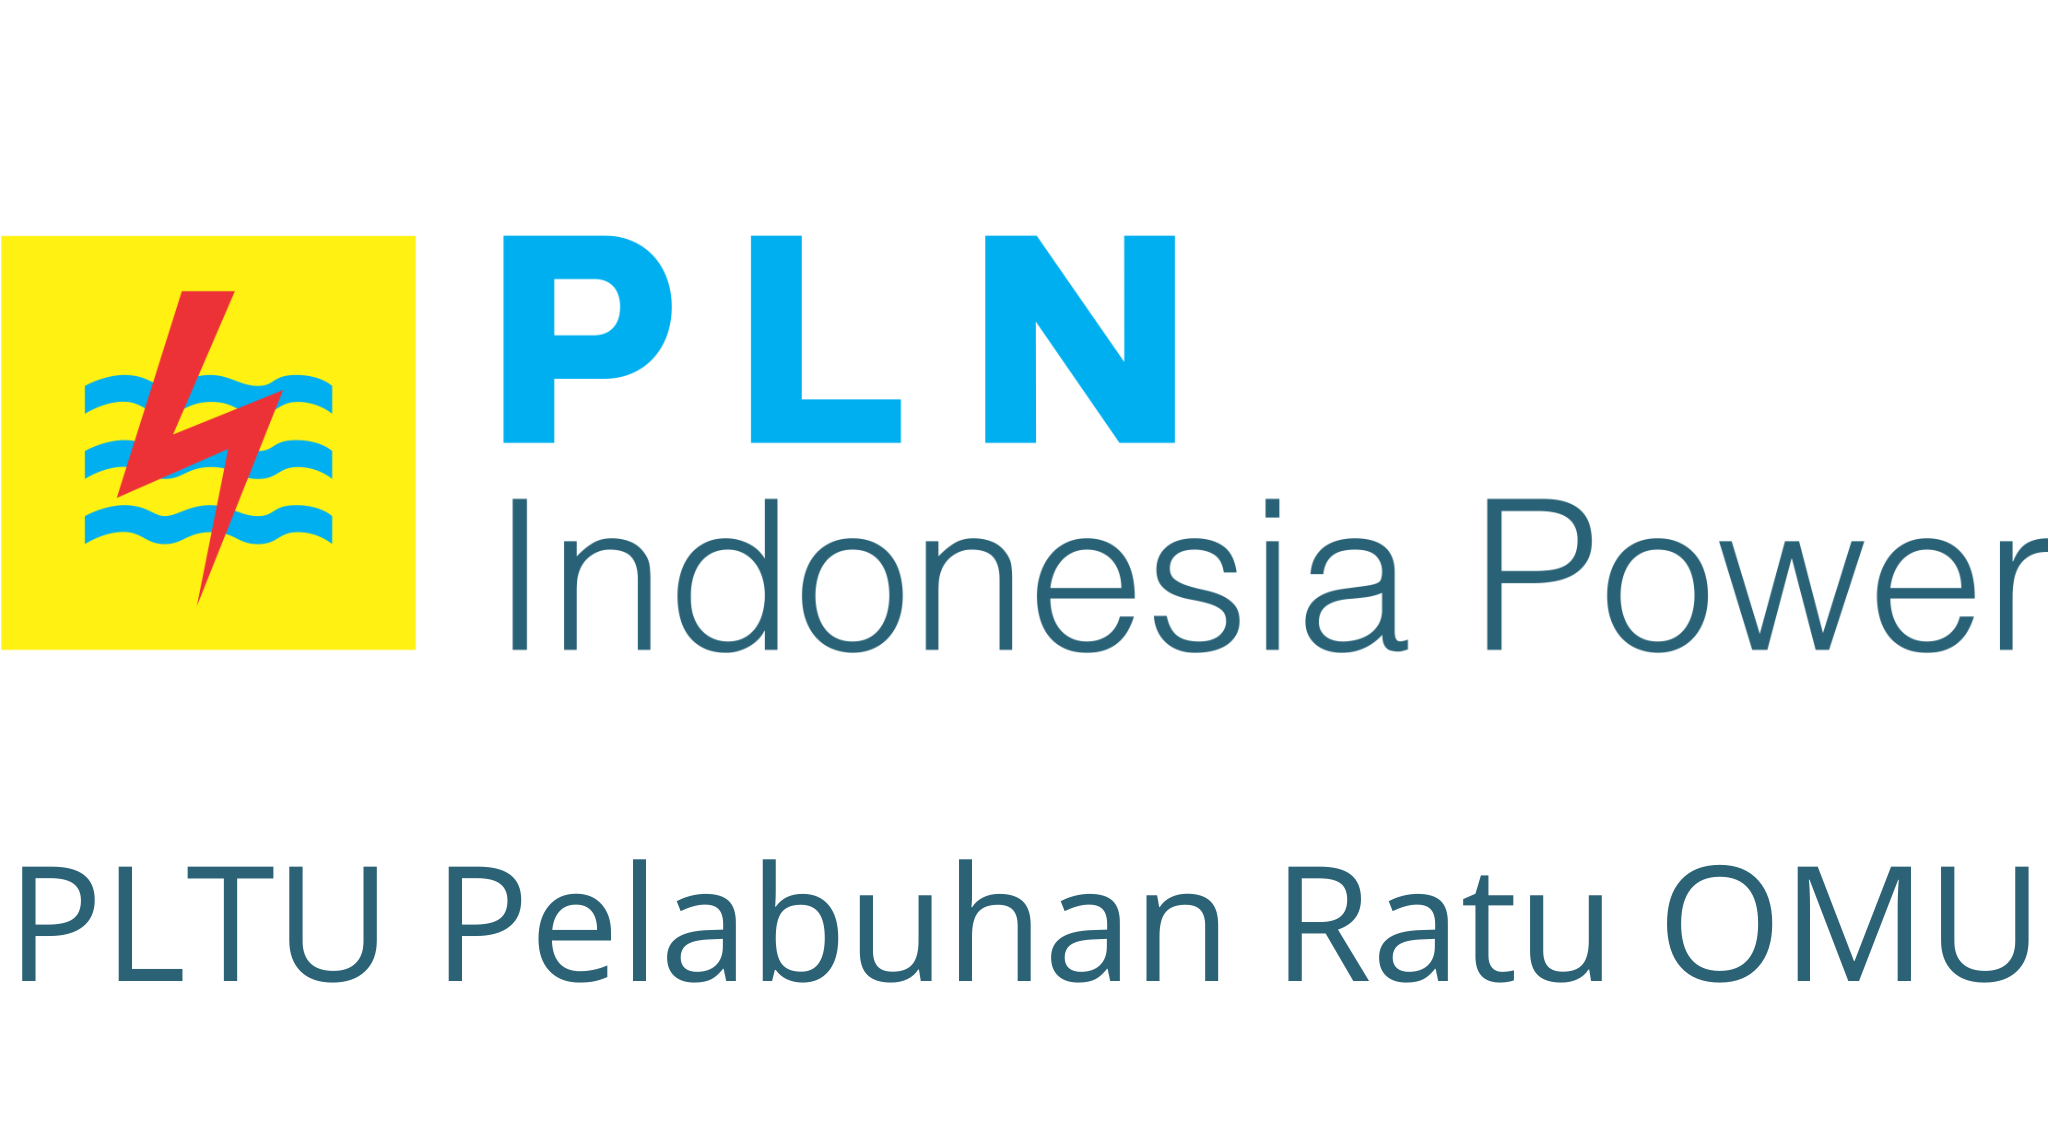 PT PLN Indonesia Power (PLTU Pelabuhan Ratu OMU)